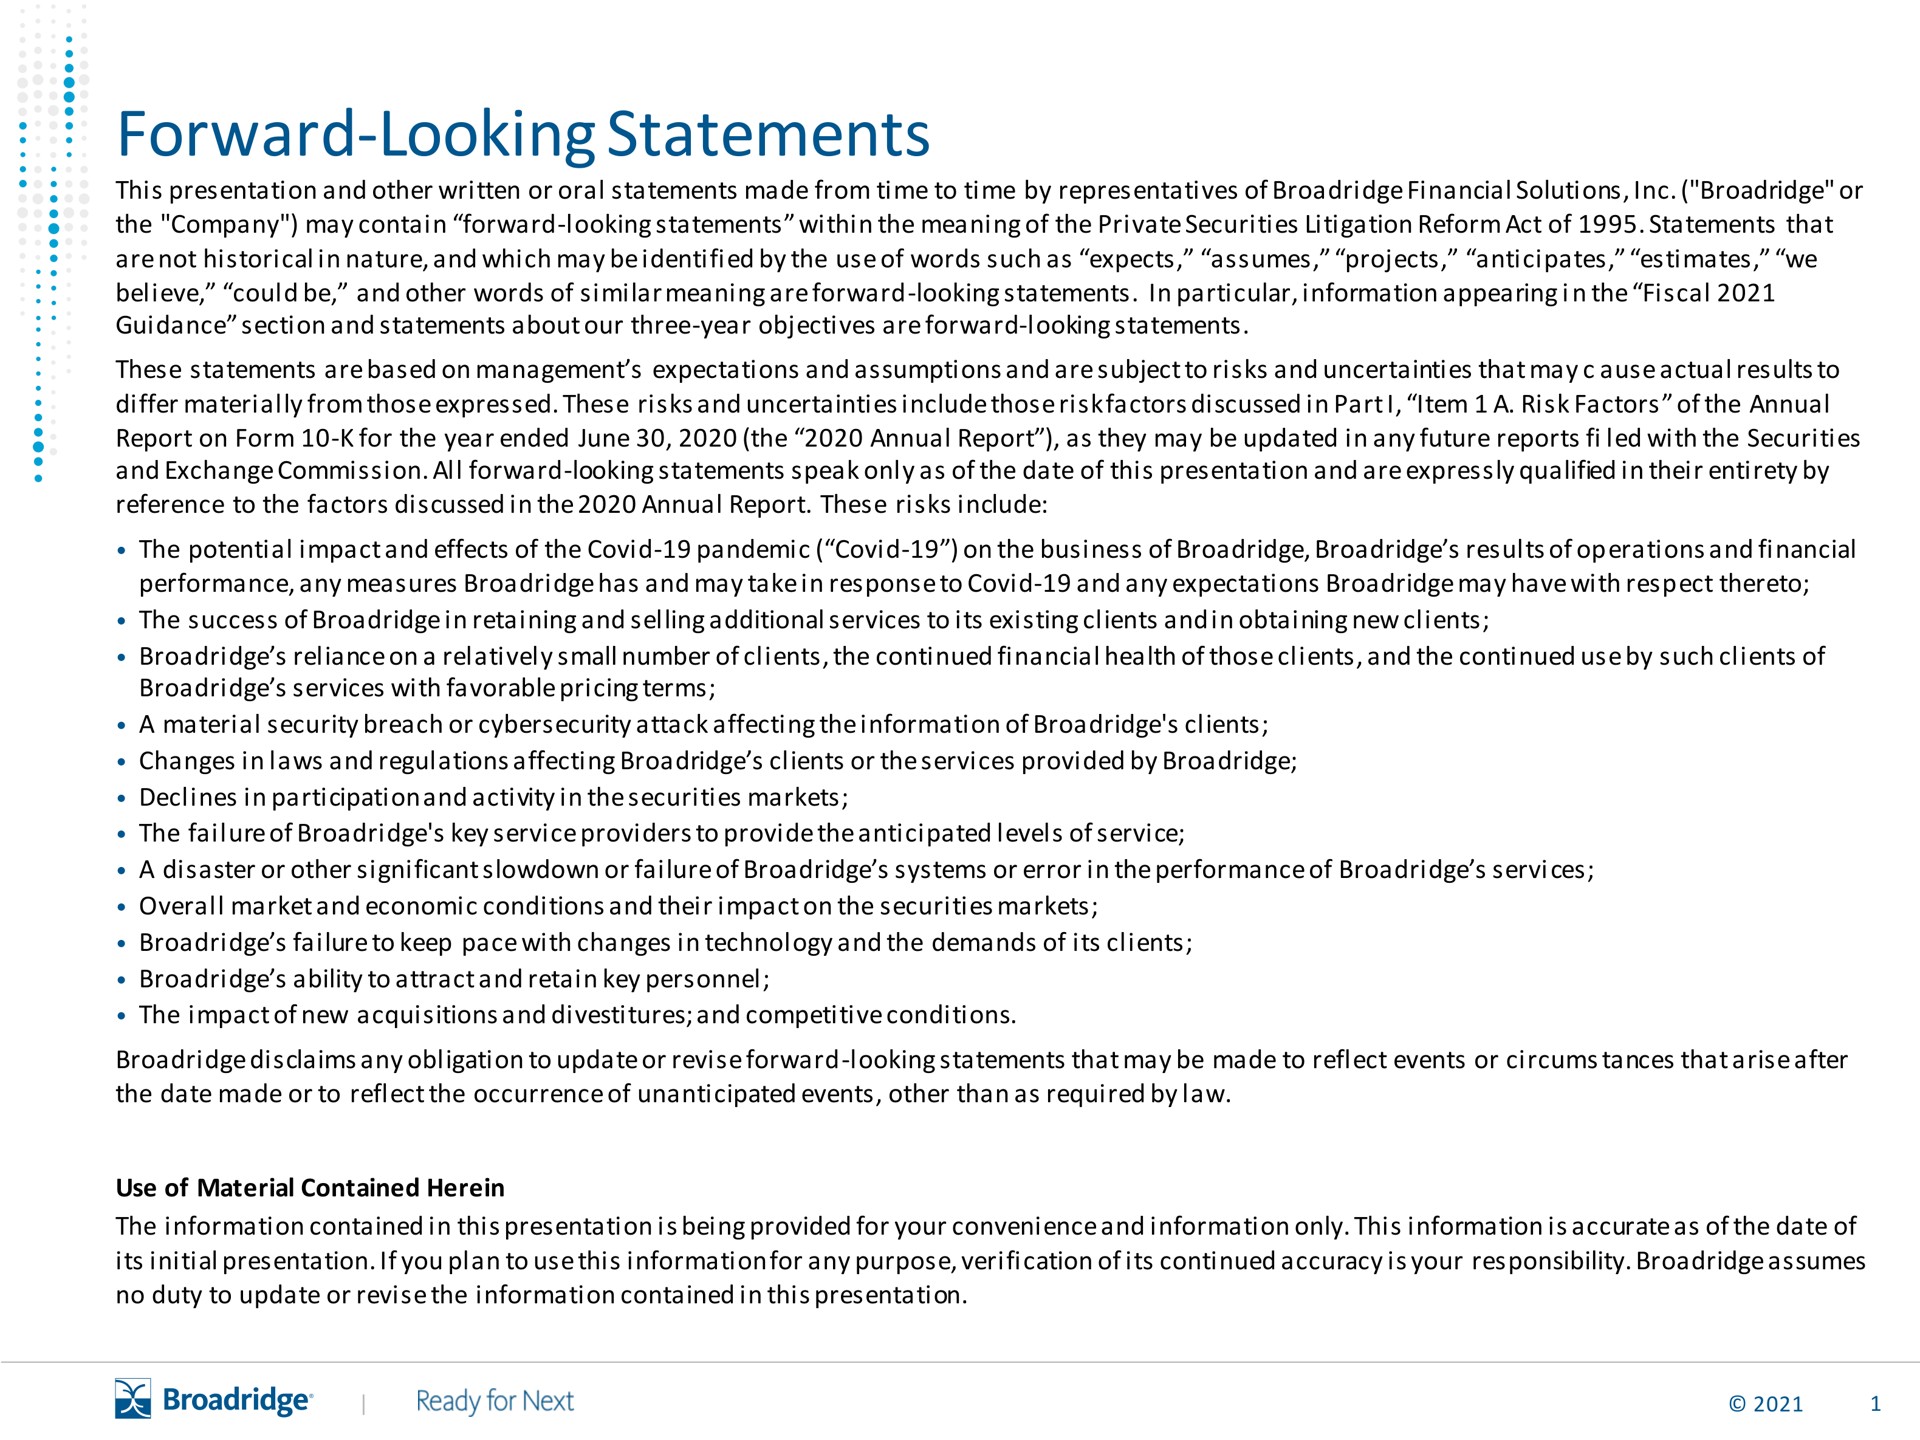 forward looking statements | Broadridge Financial Solutions